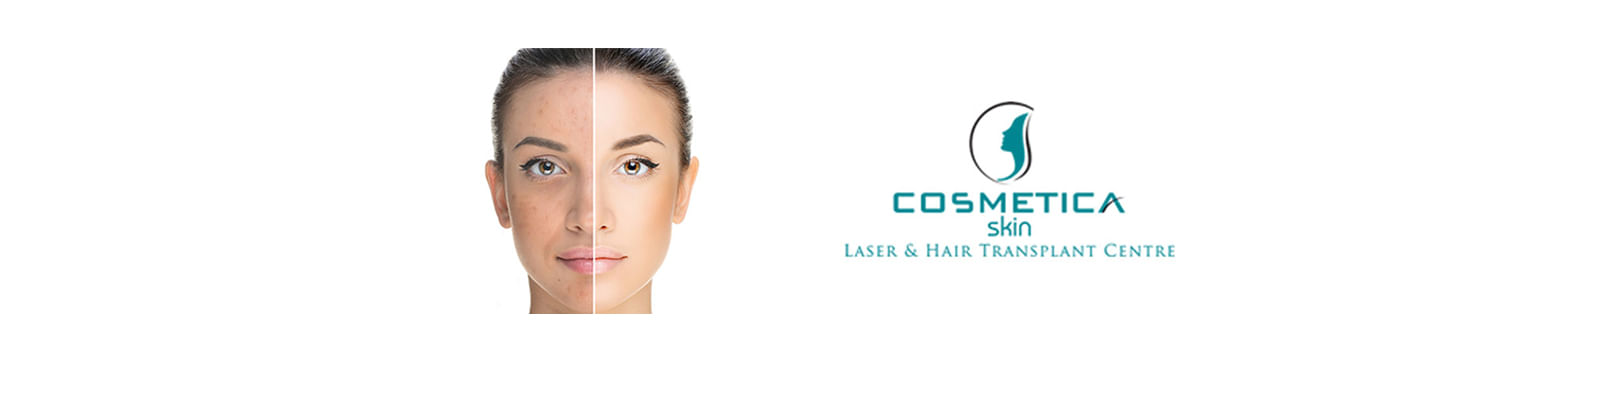 Cosmetica Skin Laser & Hair Transplant Centre